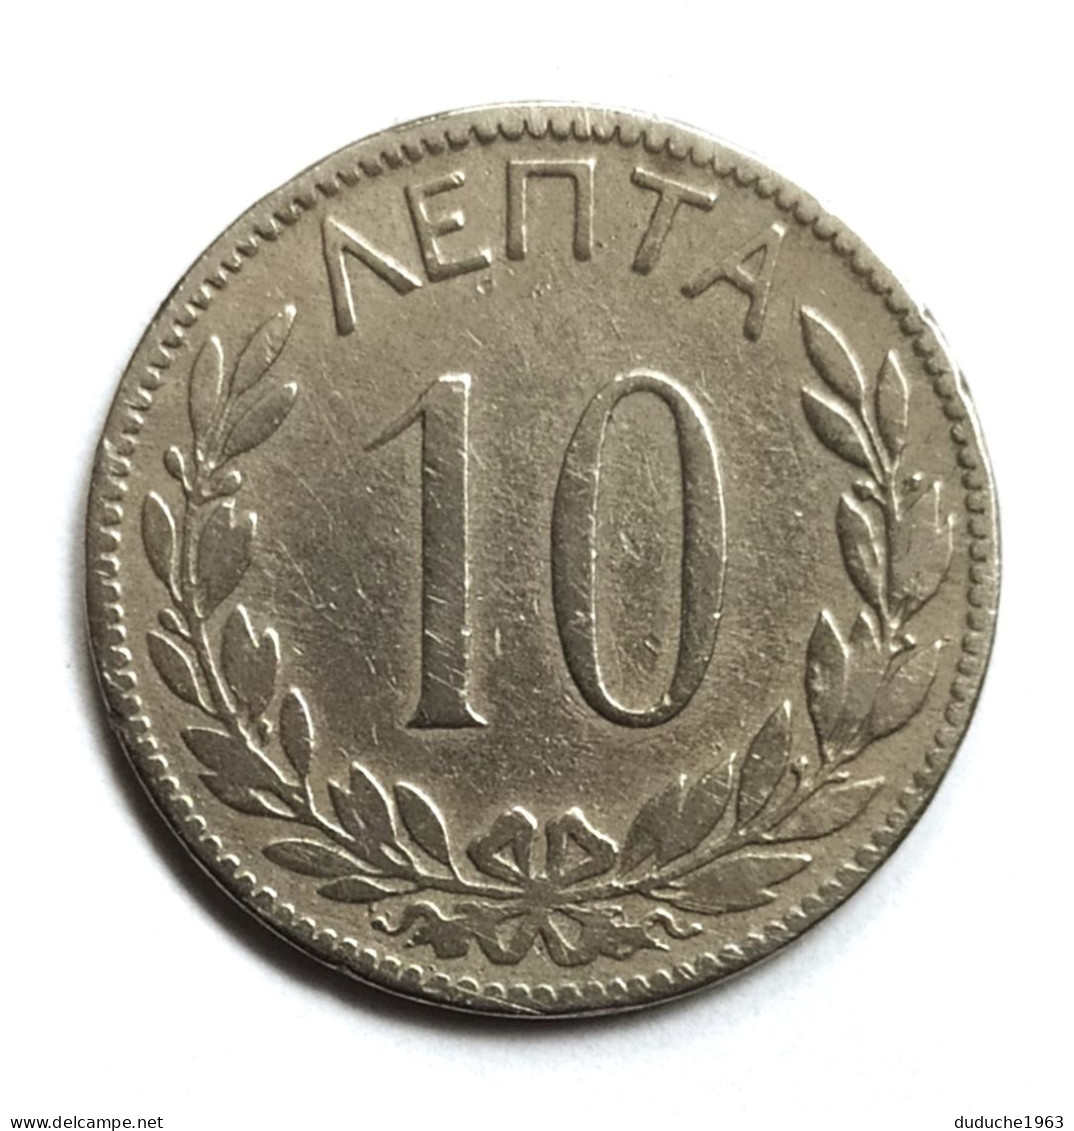 Grèce - 10 Lepta 1894 - Grèce